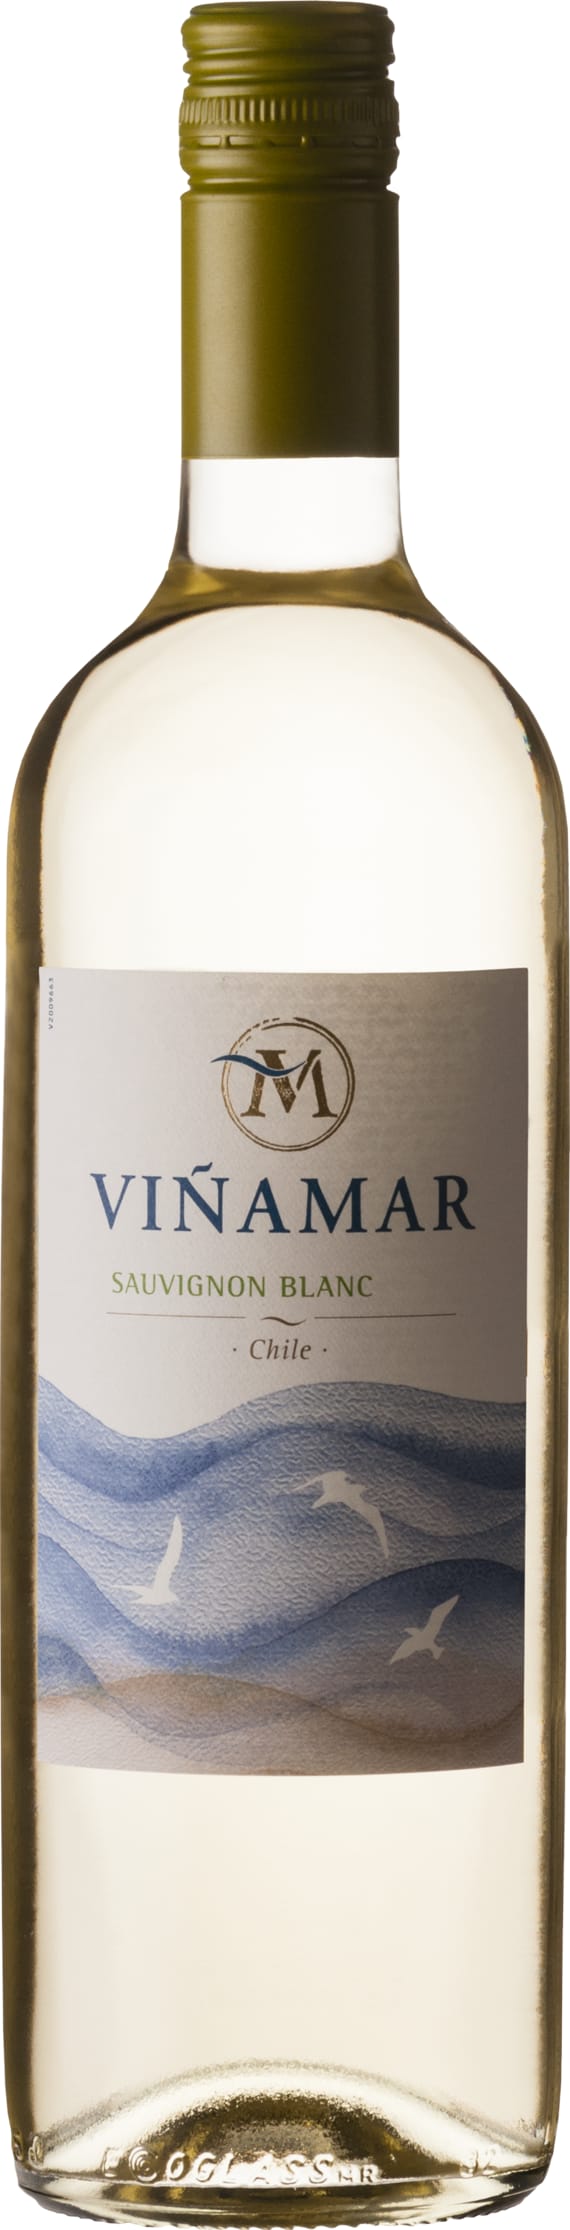 Vinamar Sauvignon Blanc 2021 75cl - Buy Vinamar Wines from GREAT WINES DIRECT wine shop